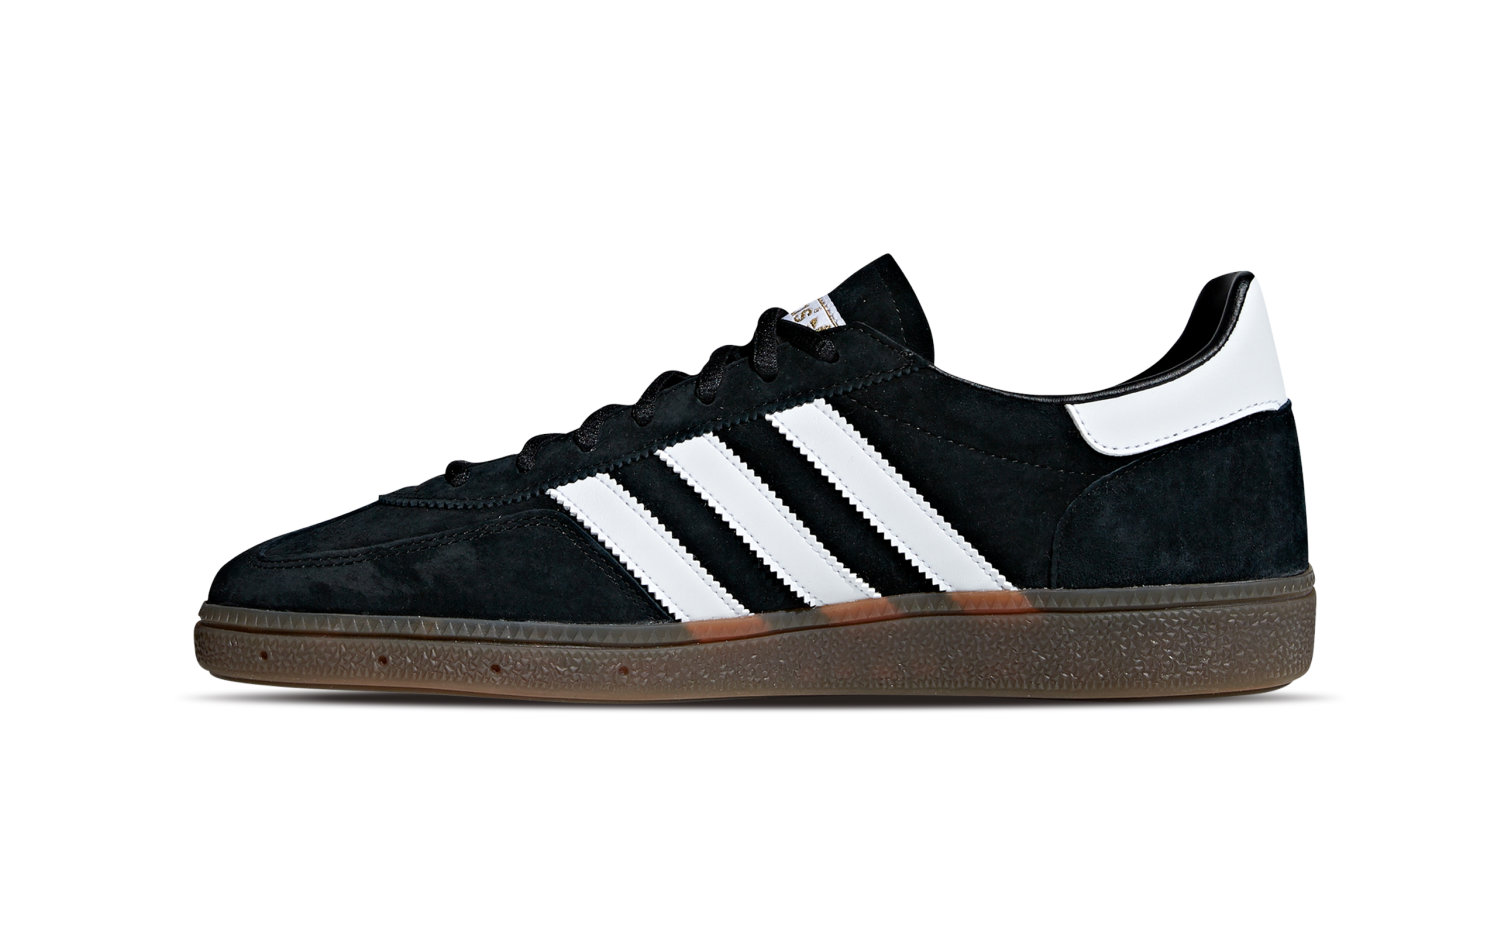 Adidas Handball Spezial, Core Black/Ftwr White/Gum férfi cipő eladó, ár |  Garage Store Webshop